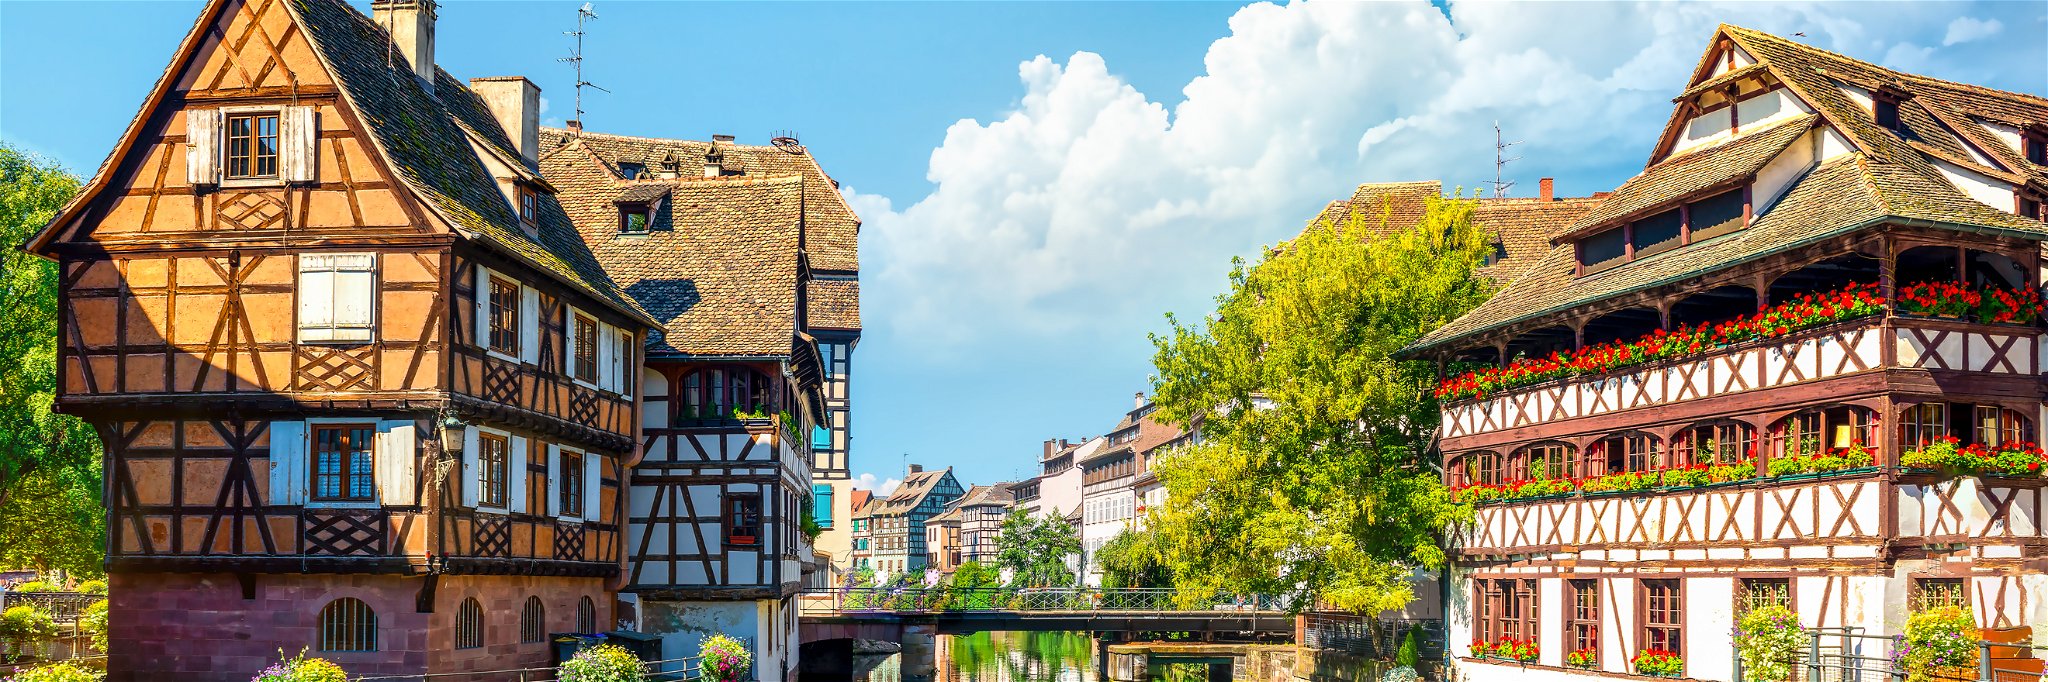 The capital of&nbsp;Alsace,&nbsp;Strasbourg&nbsp;has so much to offer.&nbsp;